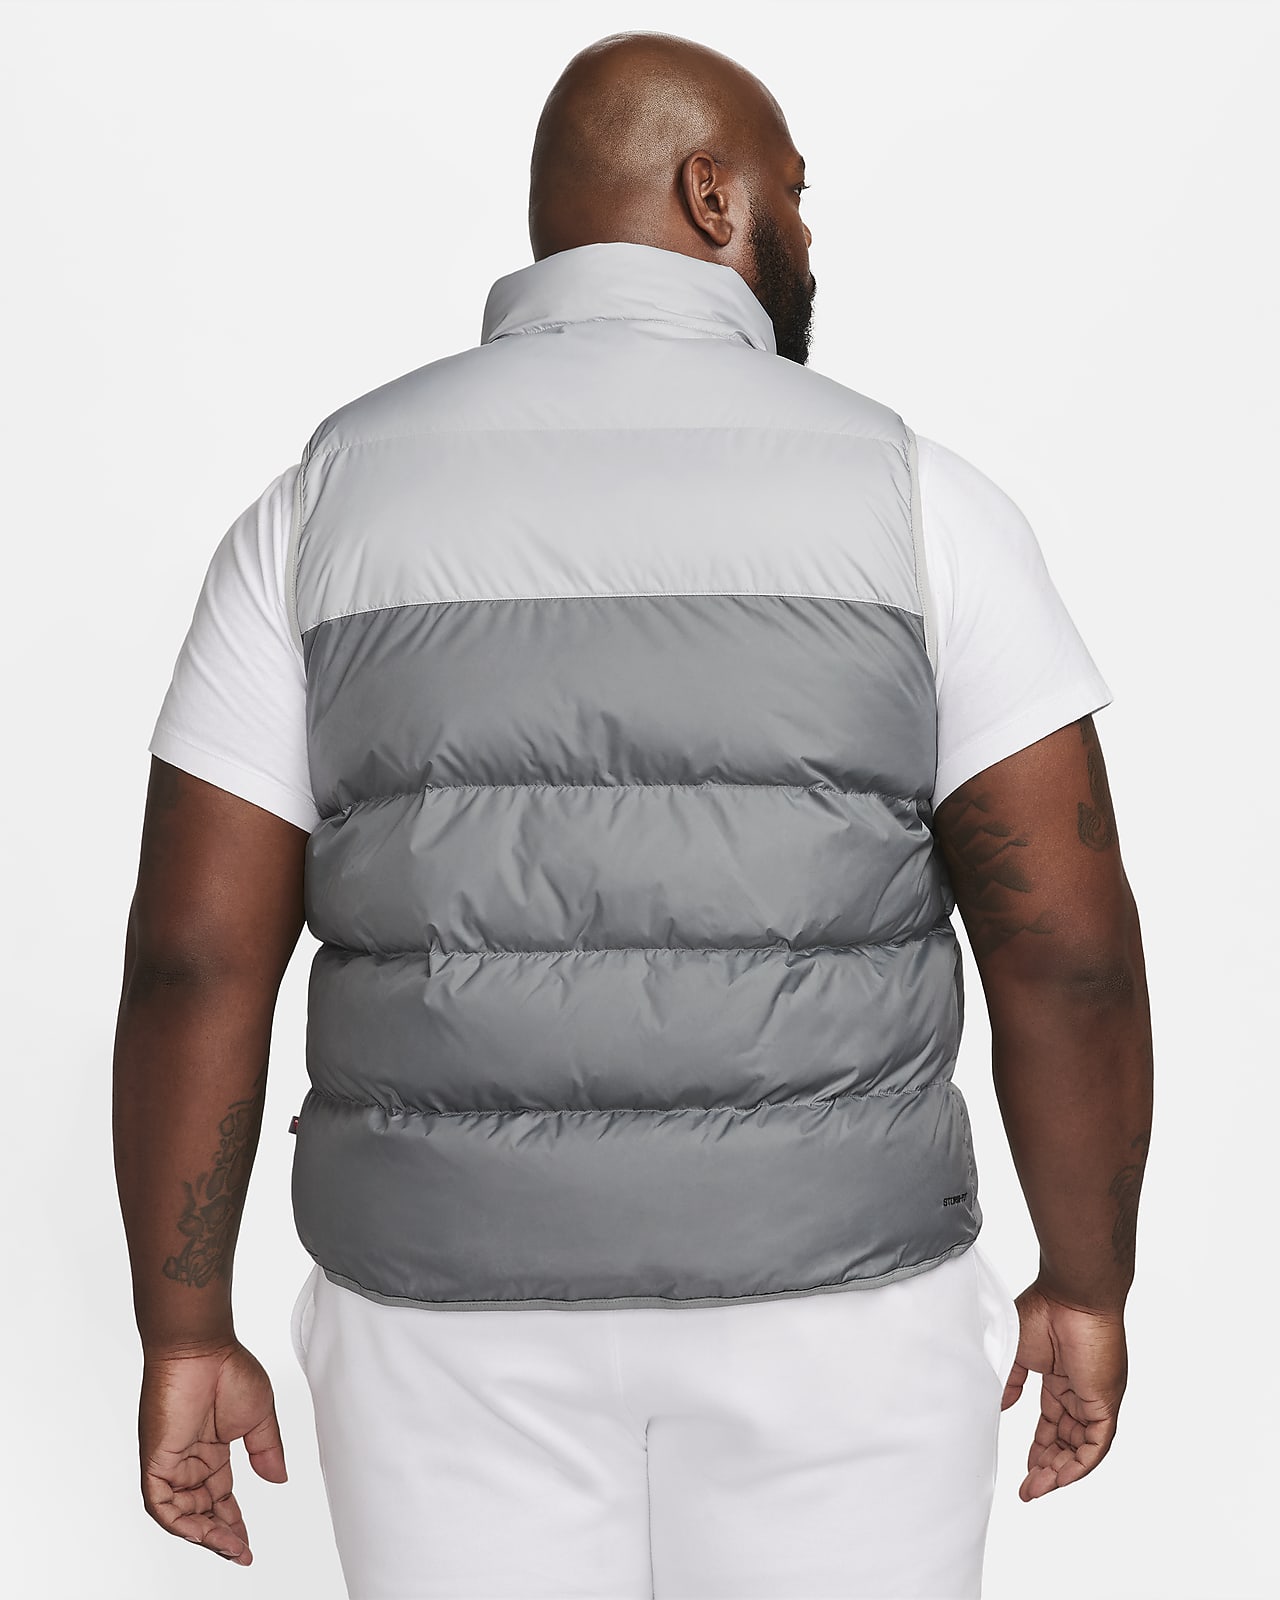 Nike Storm-FIT Windrunner Men's Insulated Vest